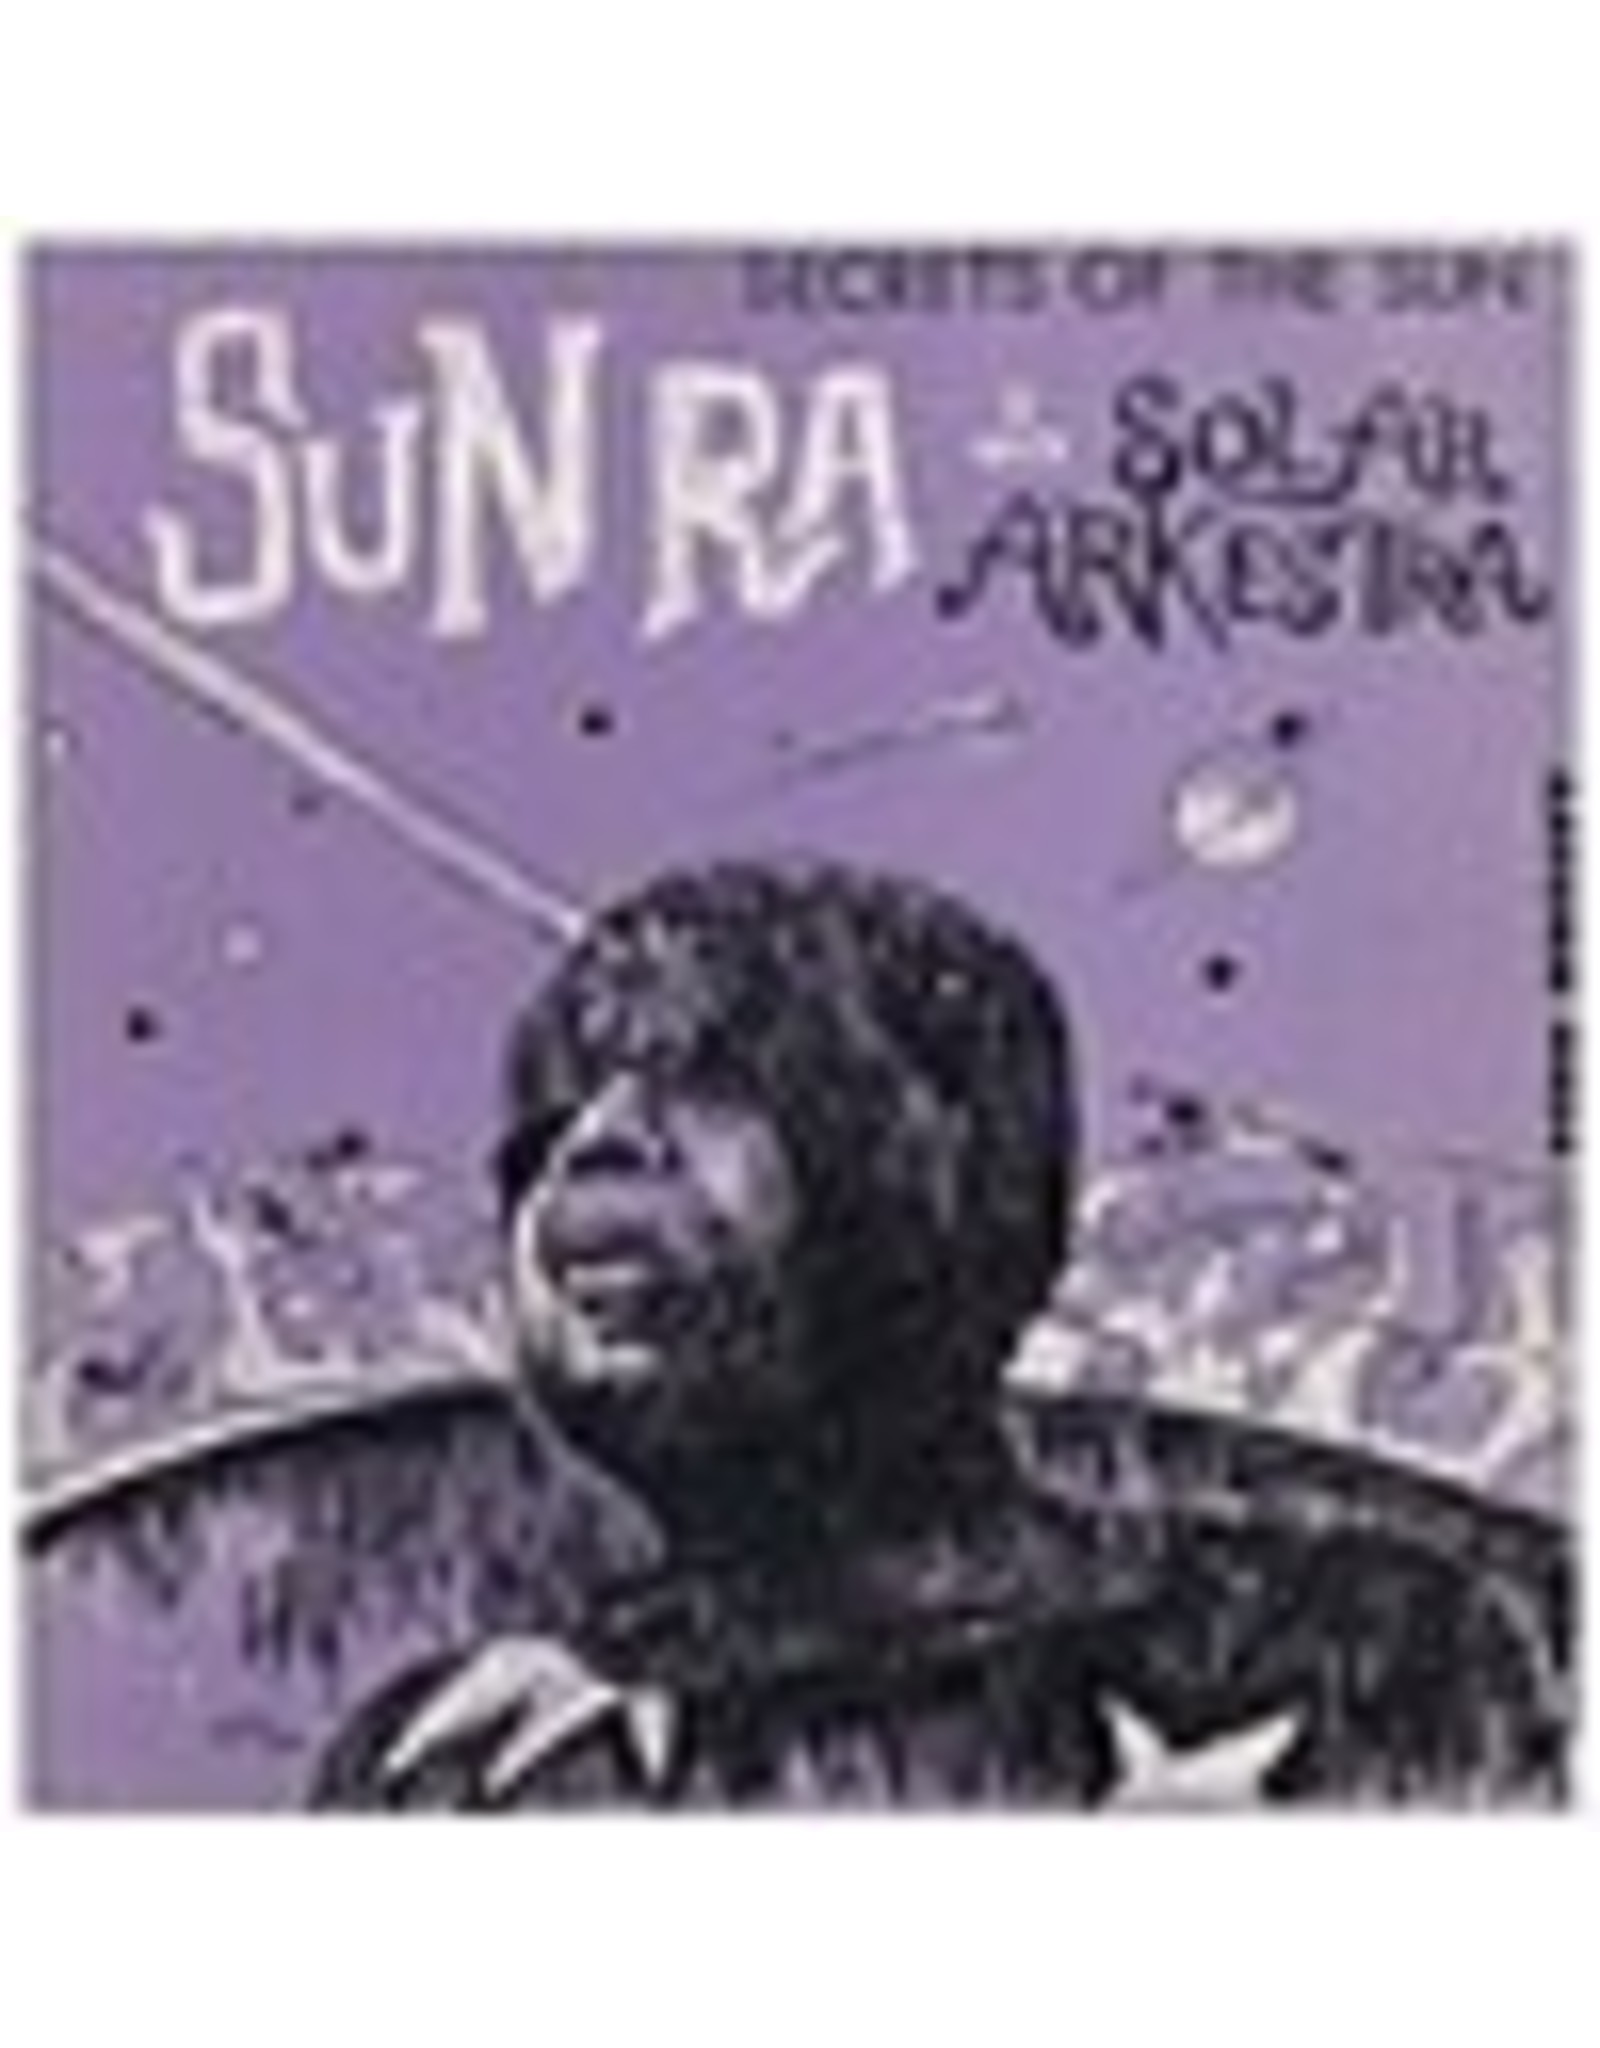 Books Sun Ra Art on Saturn: The Album cover art of Sun Ra's Saturn Label by Irwin Chusid and Chris Reisman